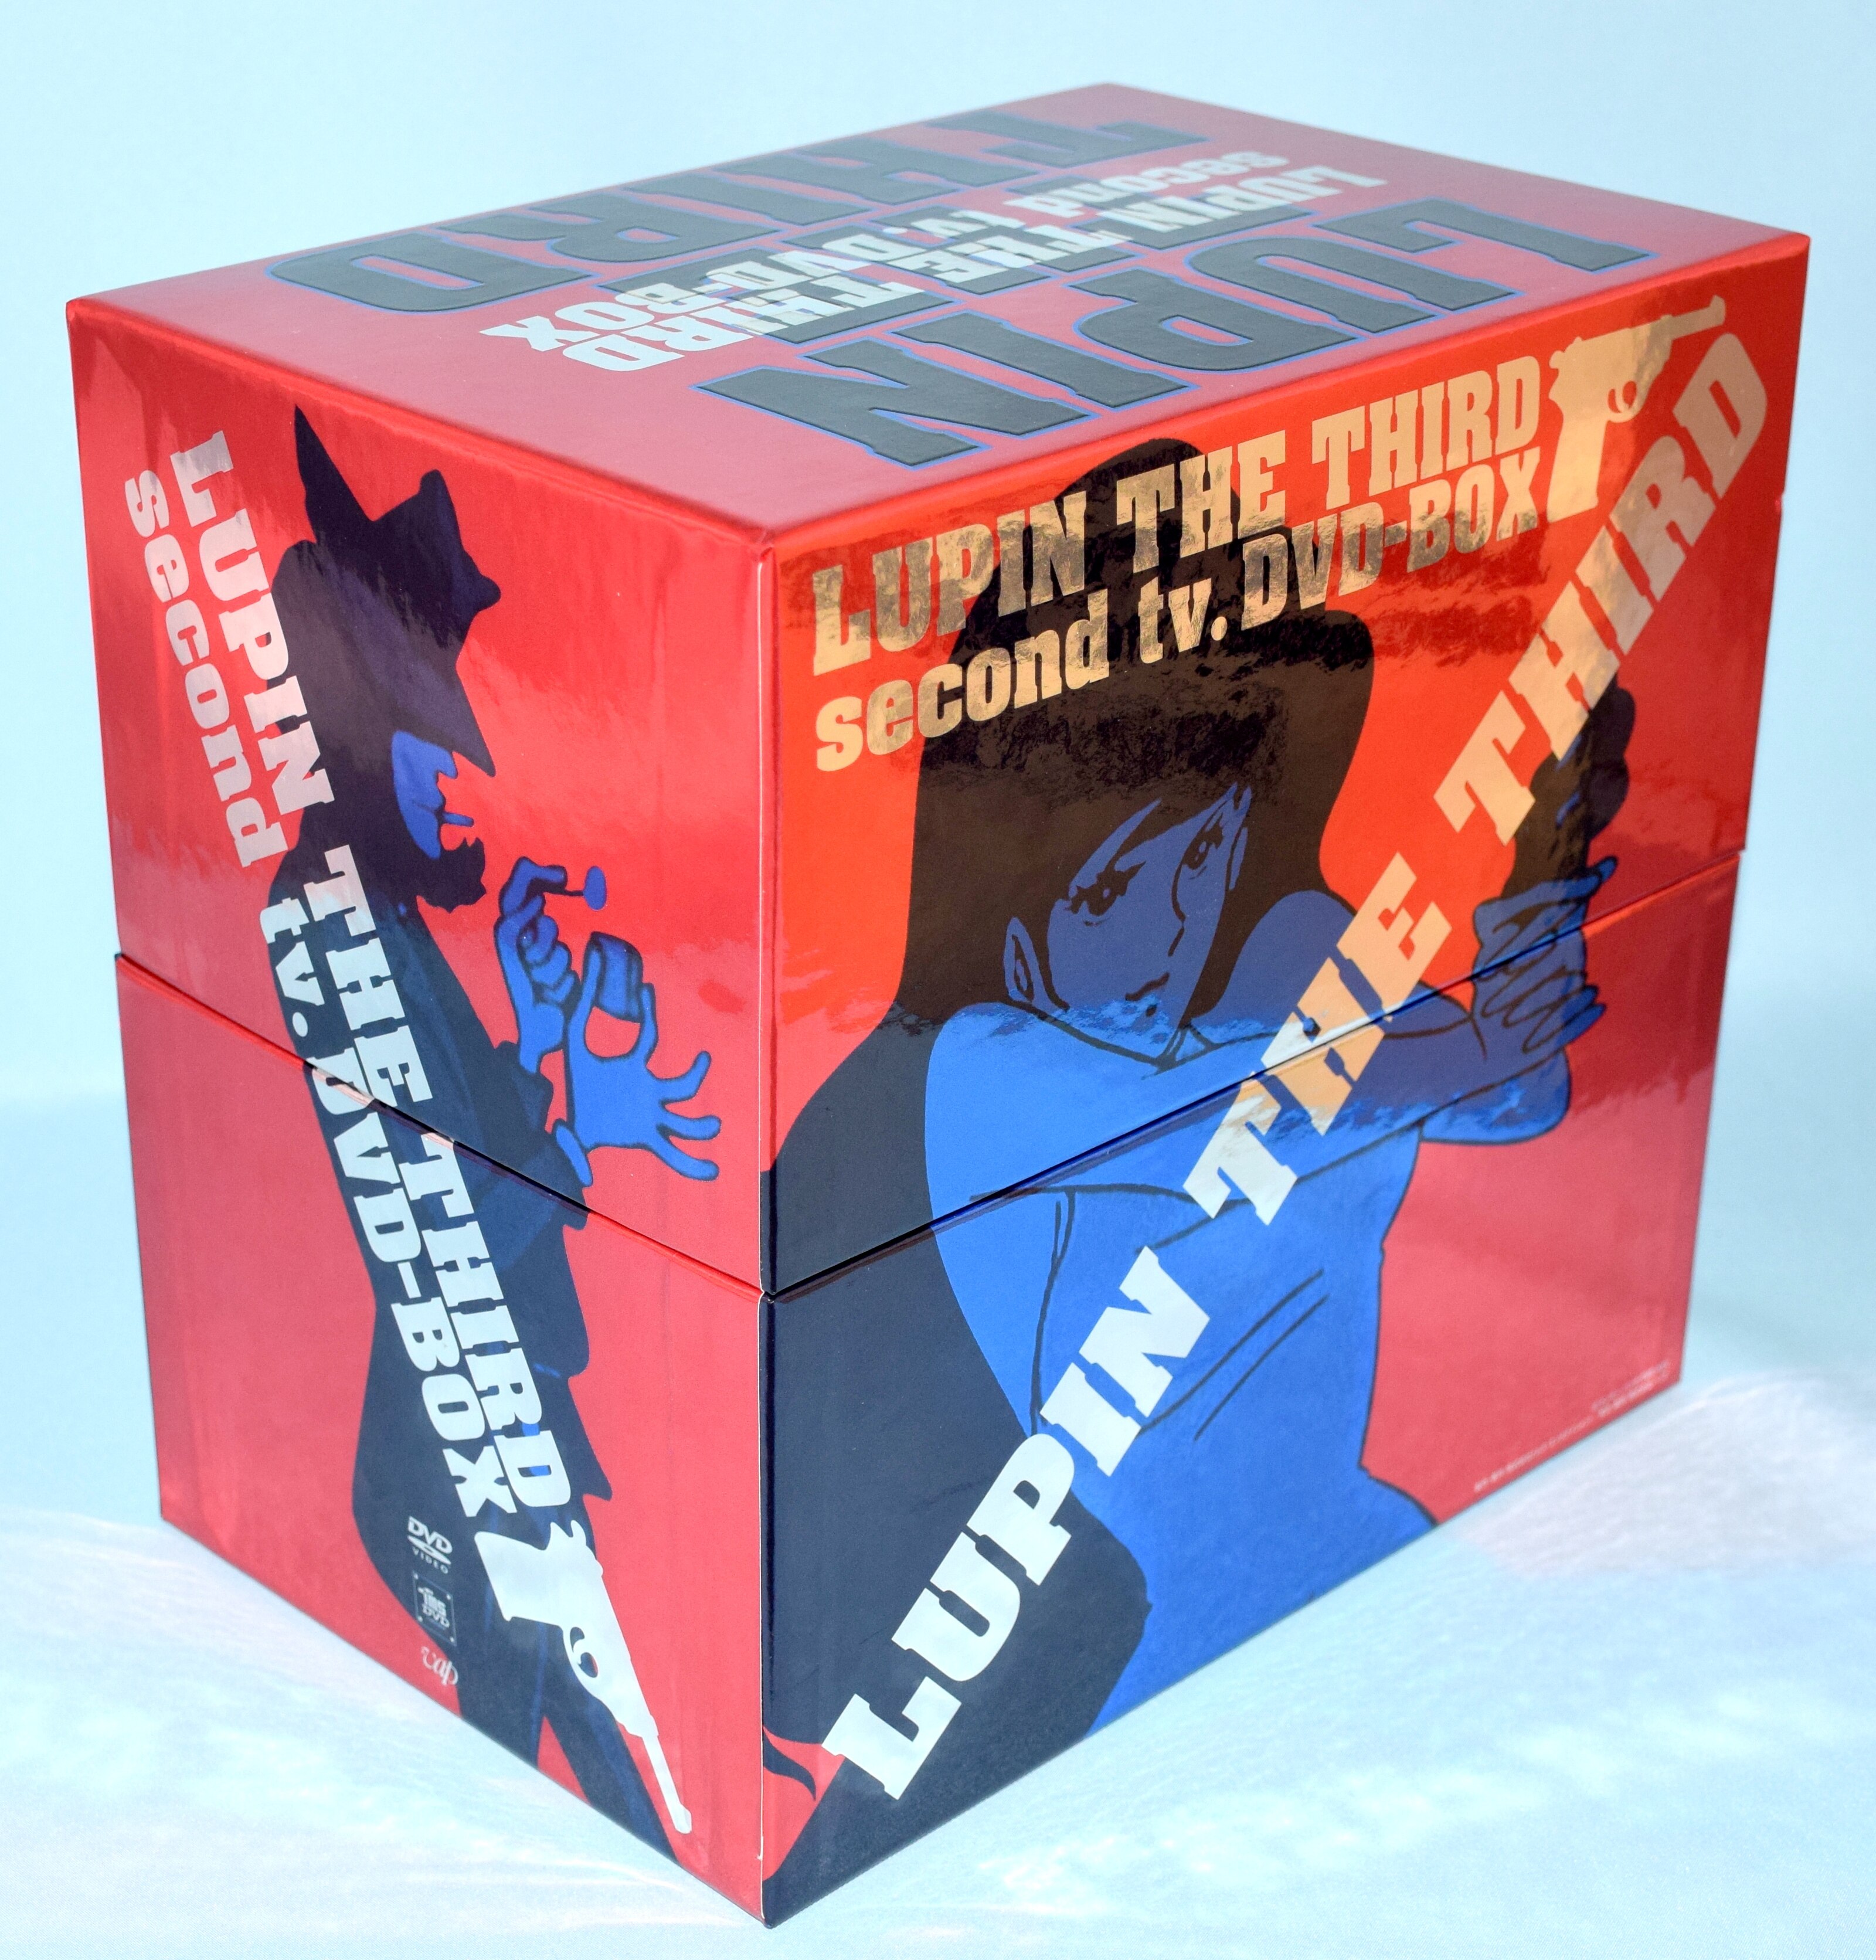 LUPIN THE THIRD second tv DVD-BOX [予約限定生産版